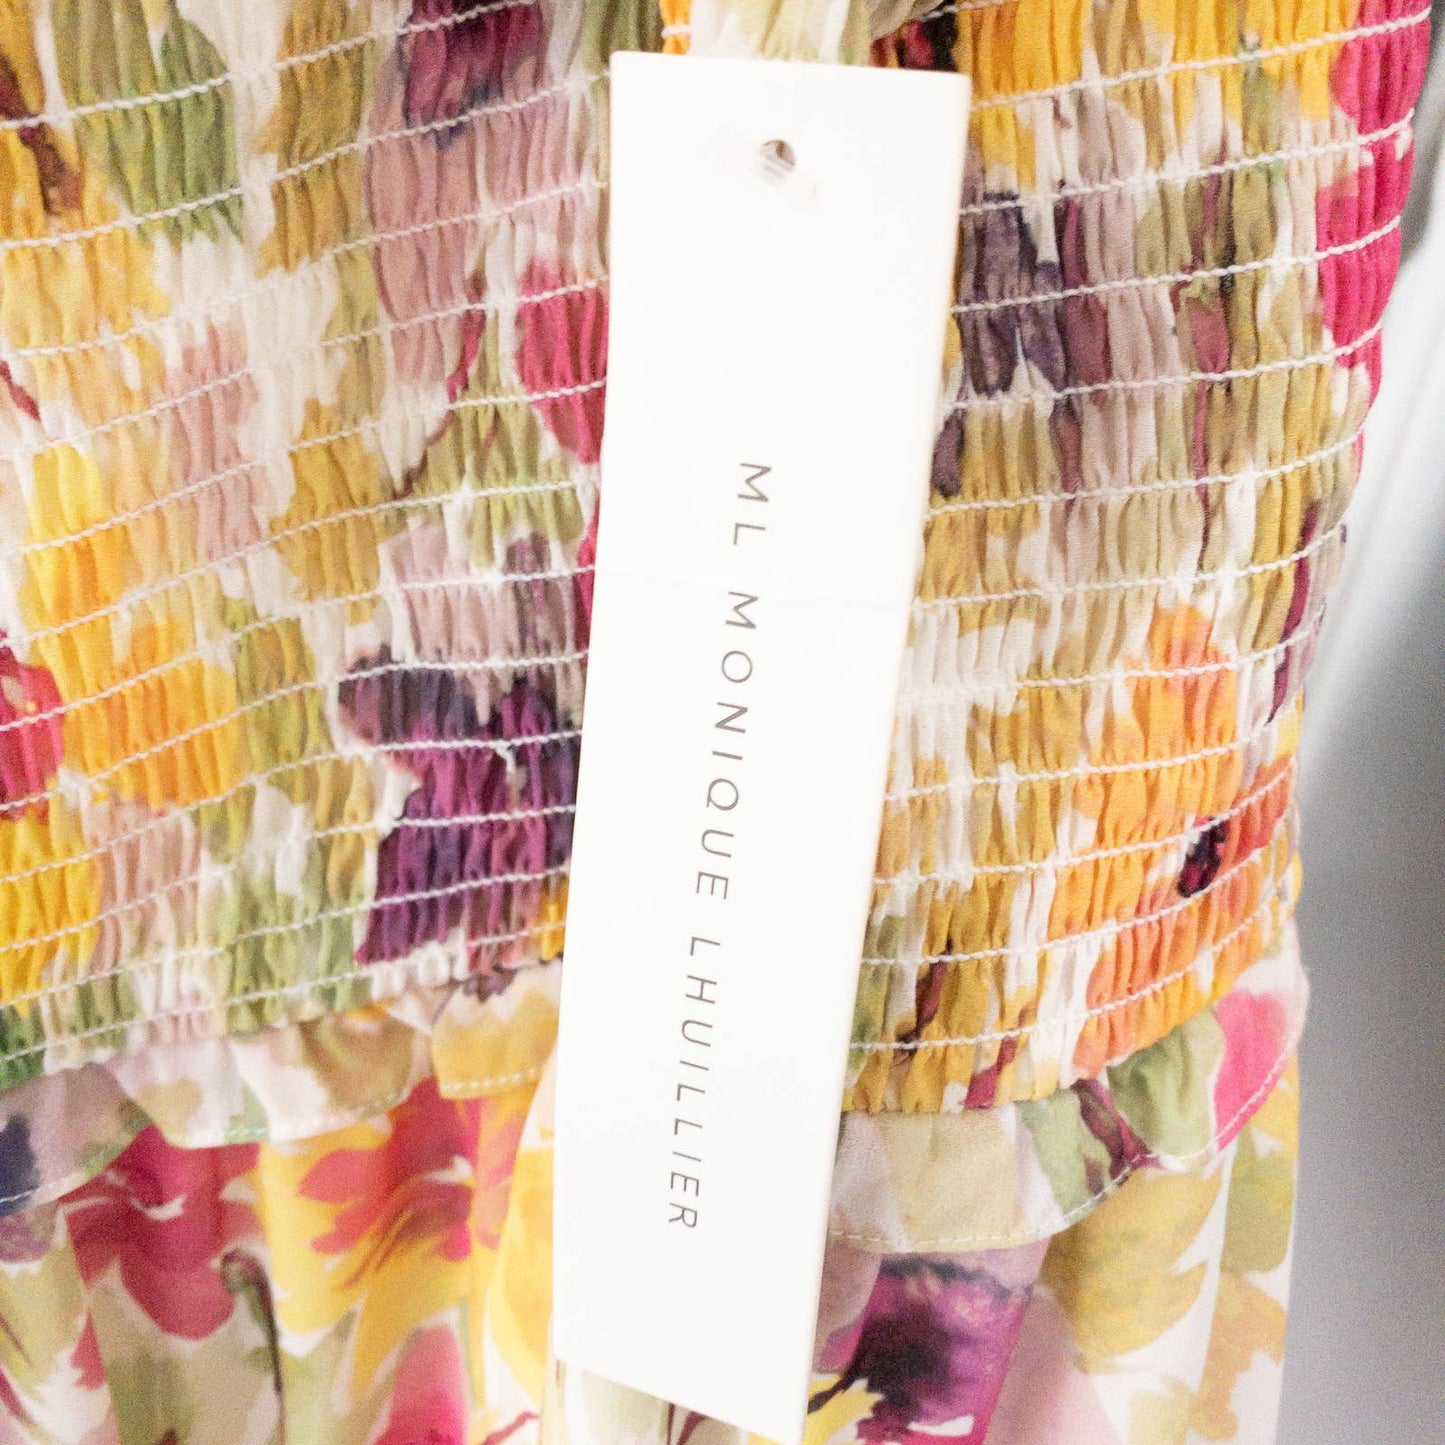 ML Monique Lhuillier | Blooming Field Smocked Midi Dress | Sz 16